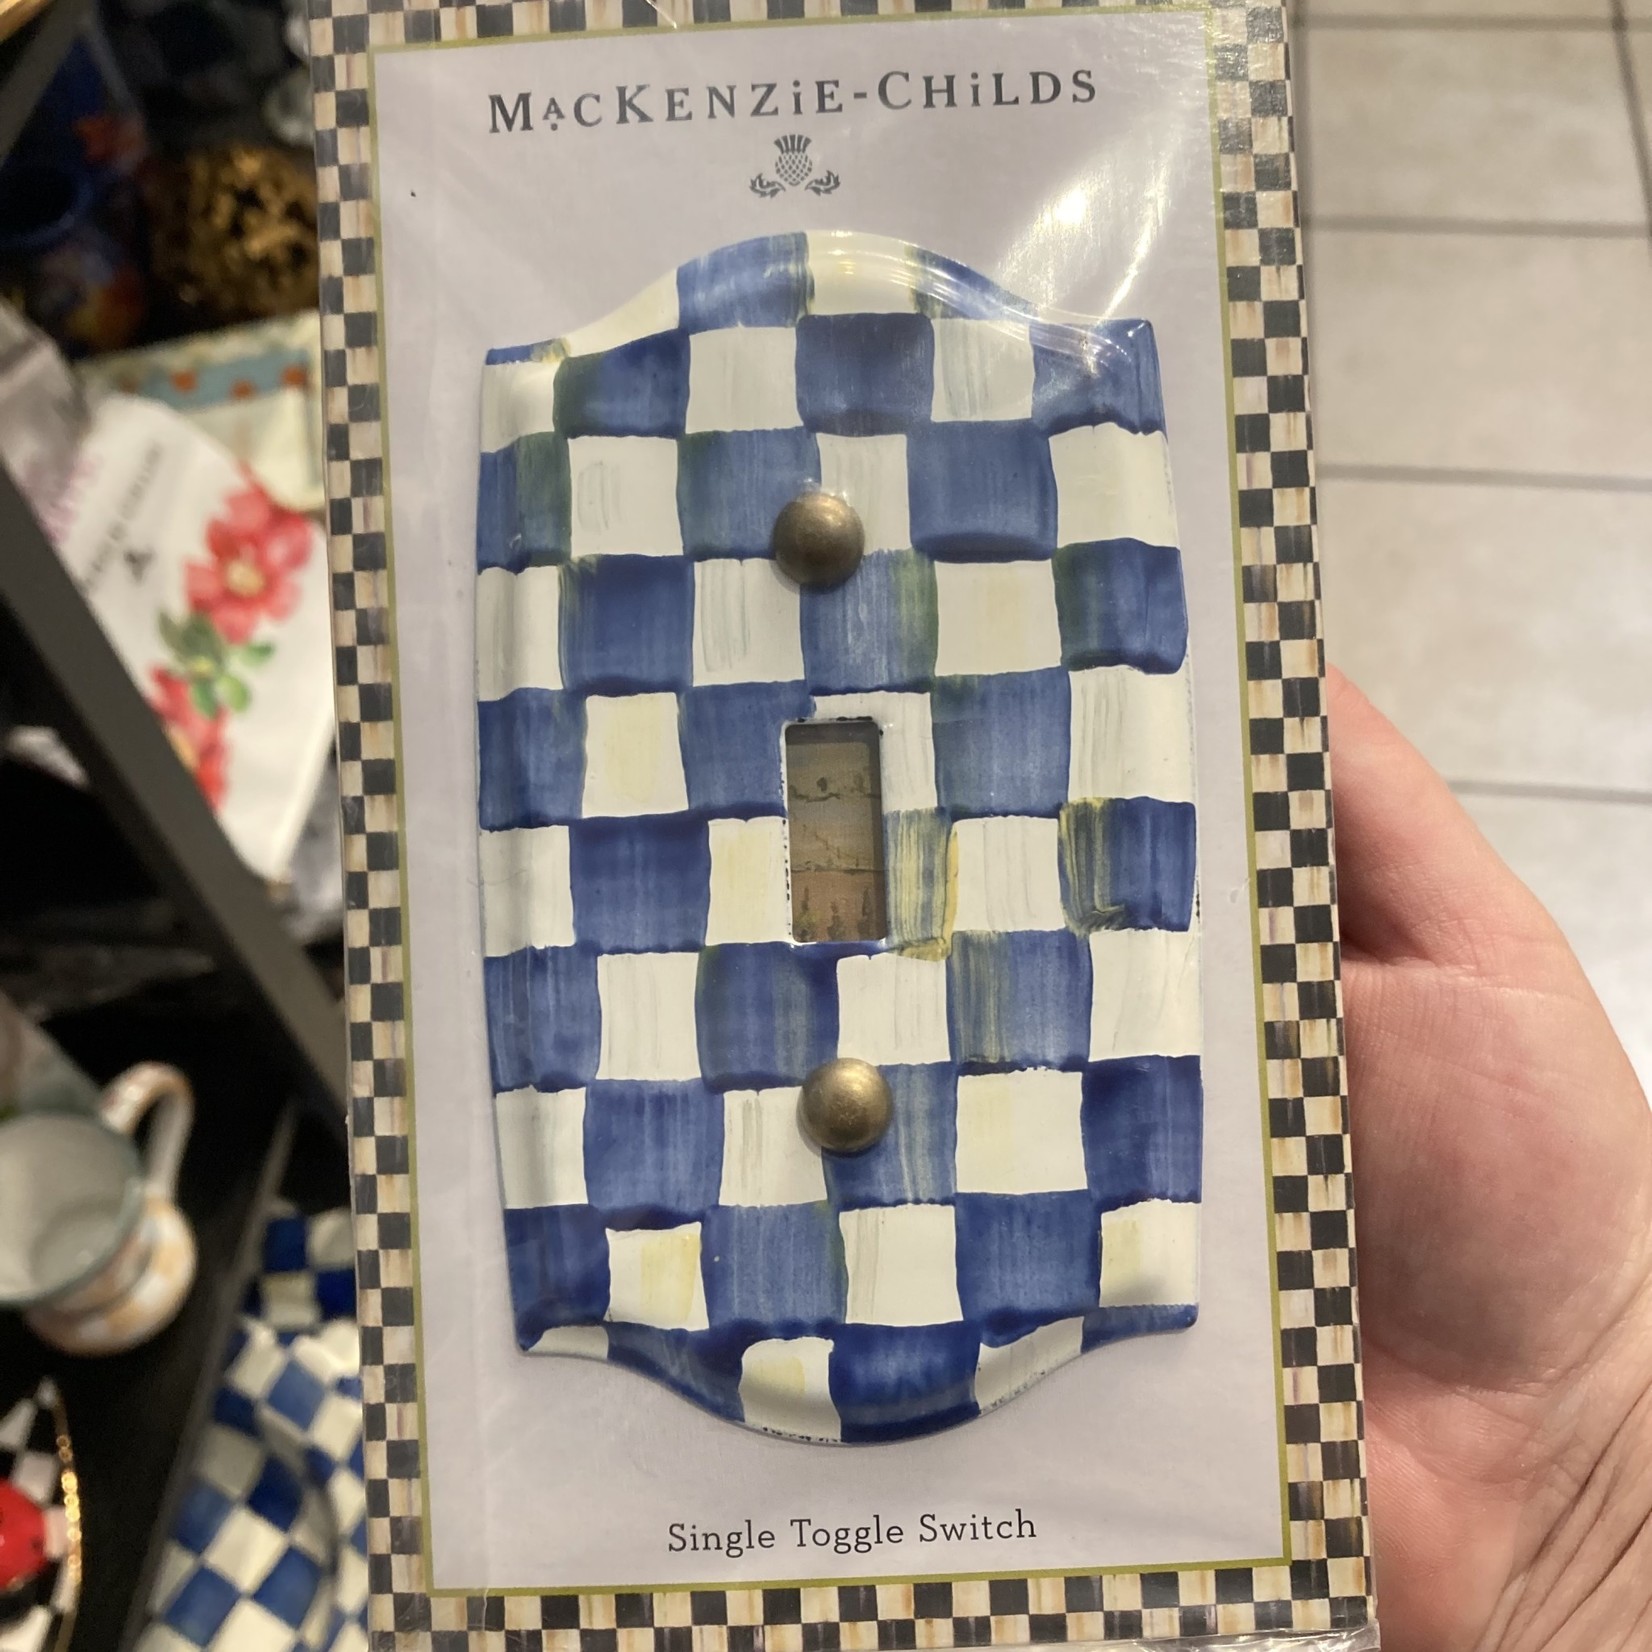 MacKenzie-Childs Royal Check Switch Plate - Single Toggle